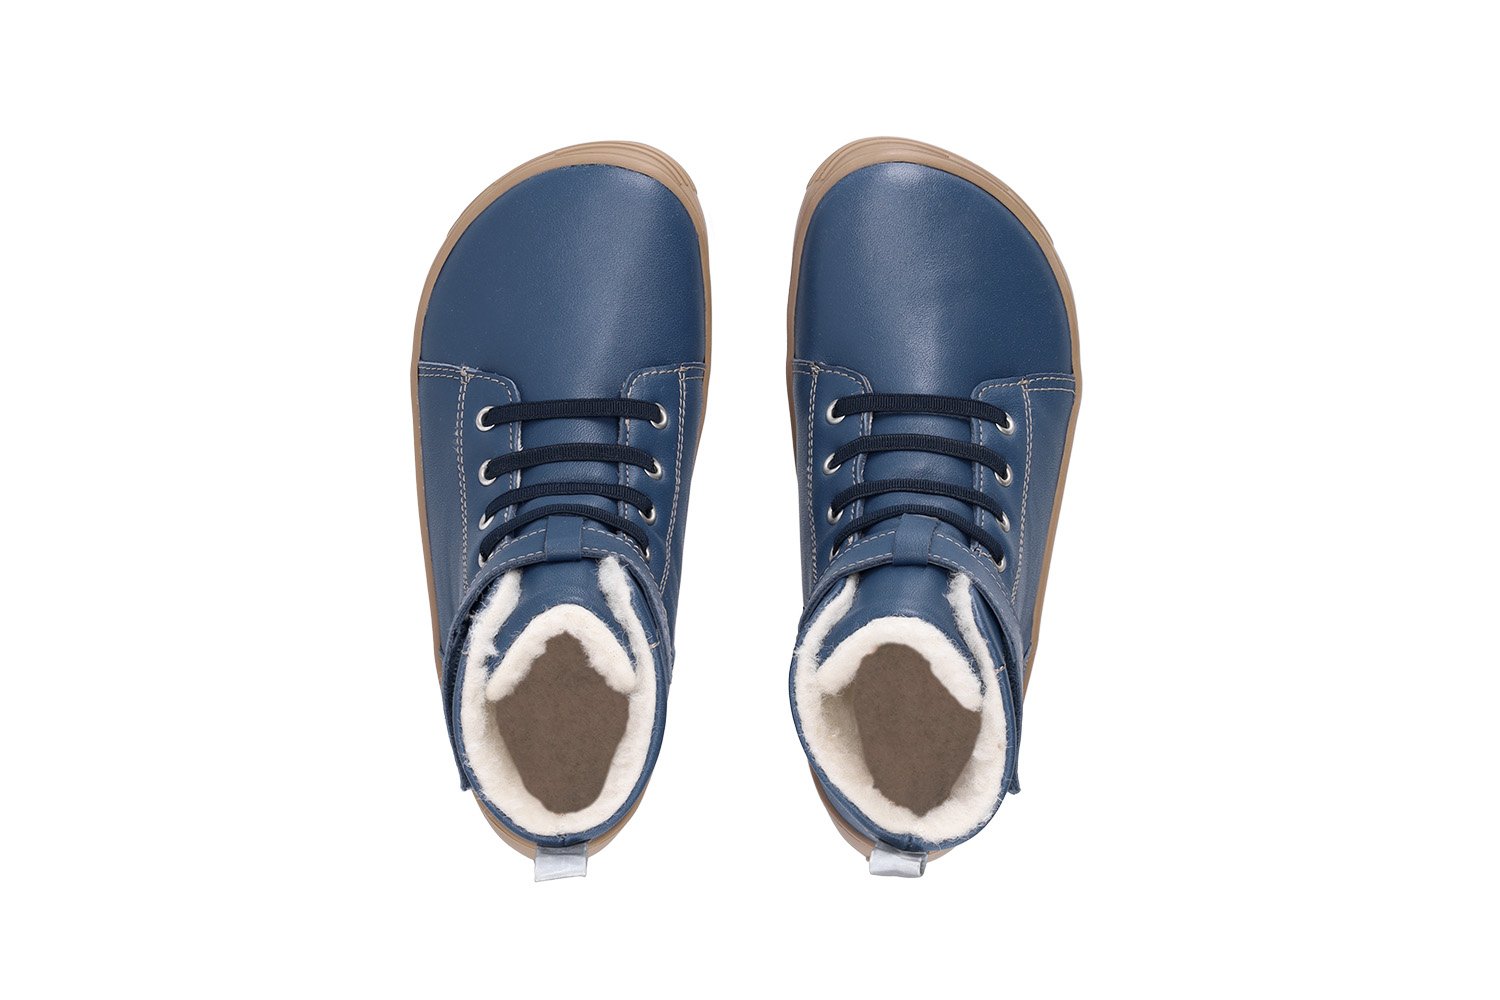 Barefoot zapatillas de niños Be Lenka Fluid - Blue & Grey – Aister